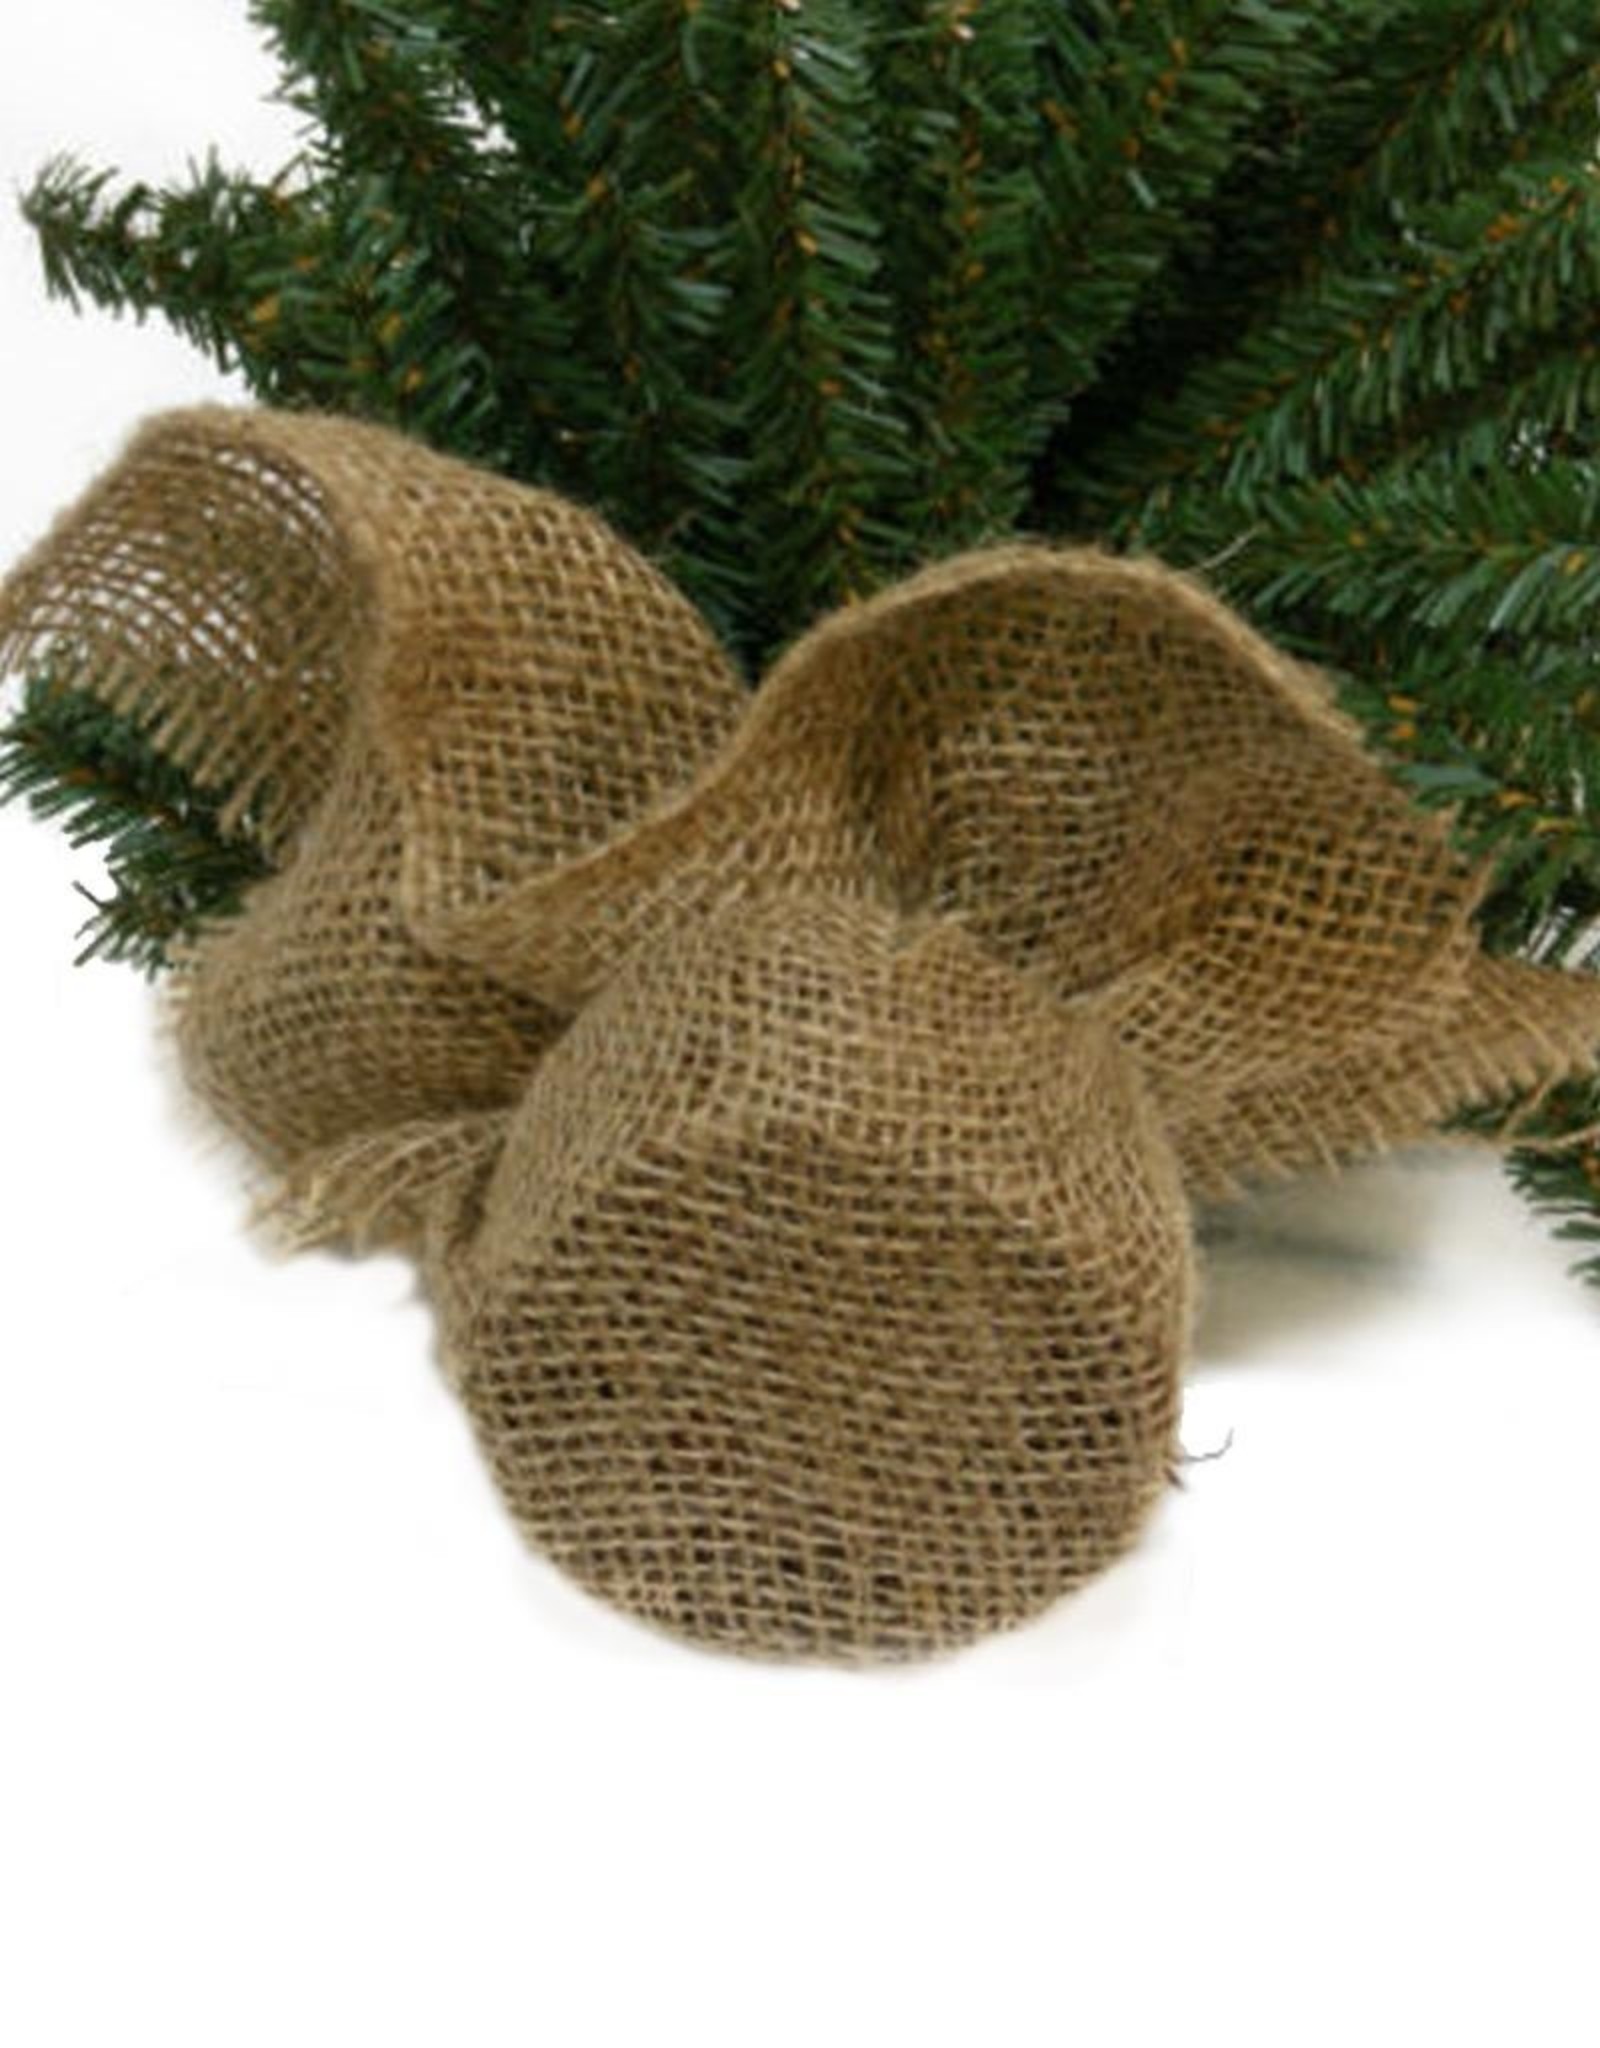 Kurt Adler Mini Pine Christmas Tree 18 Inch Burlap Wrapped Base